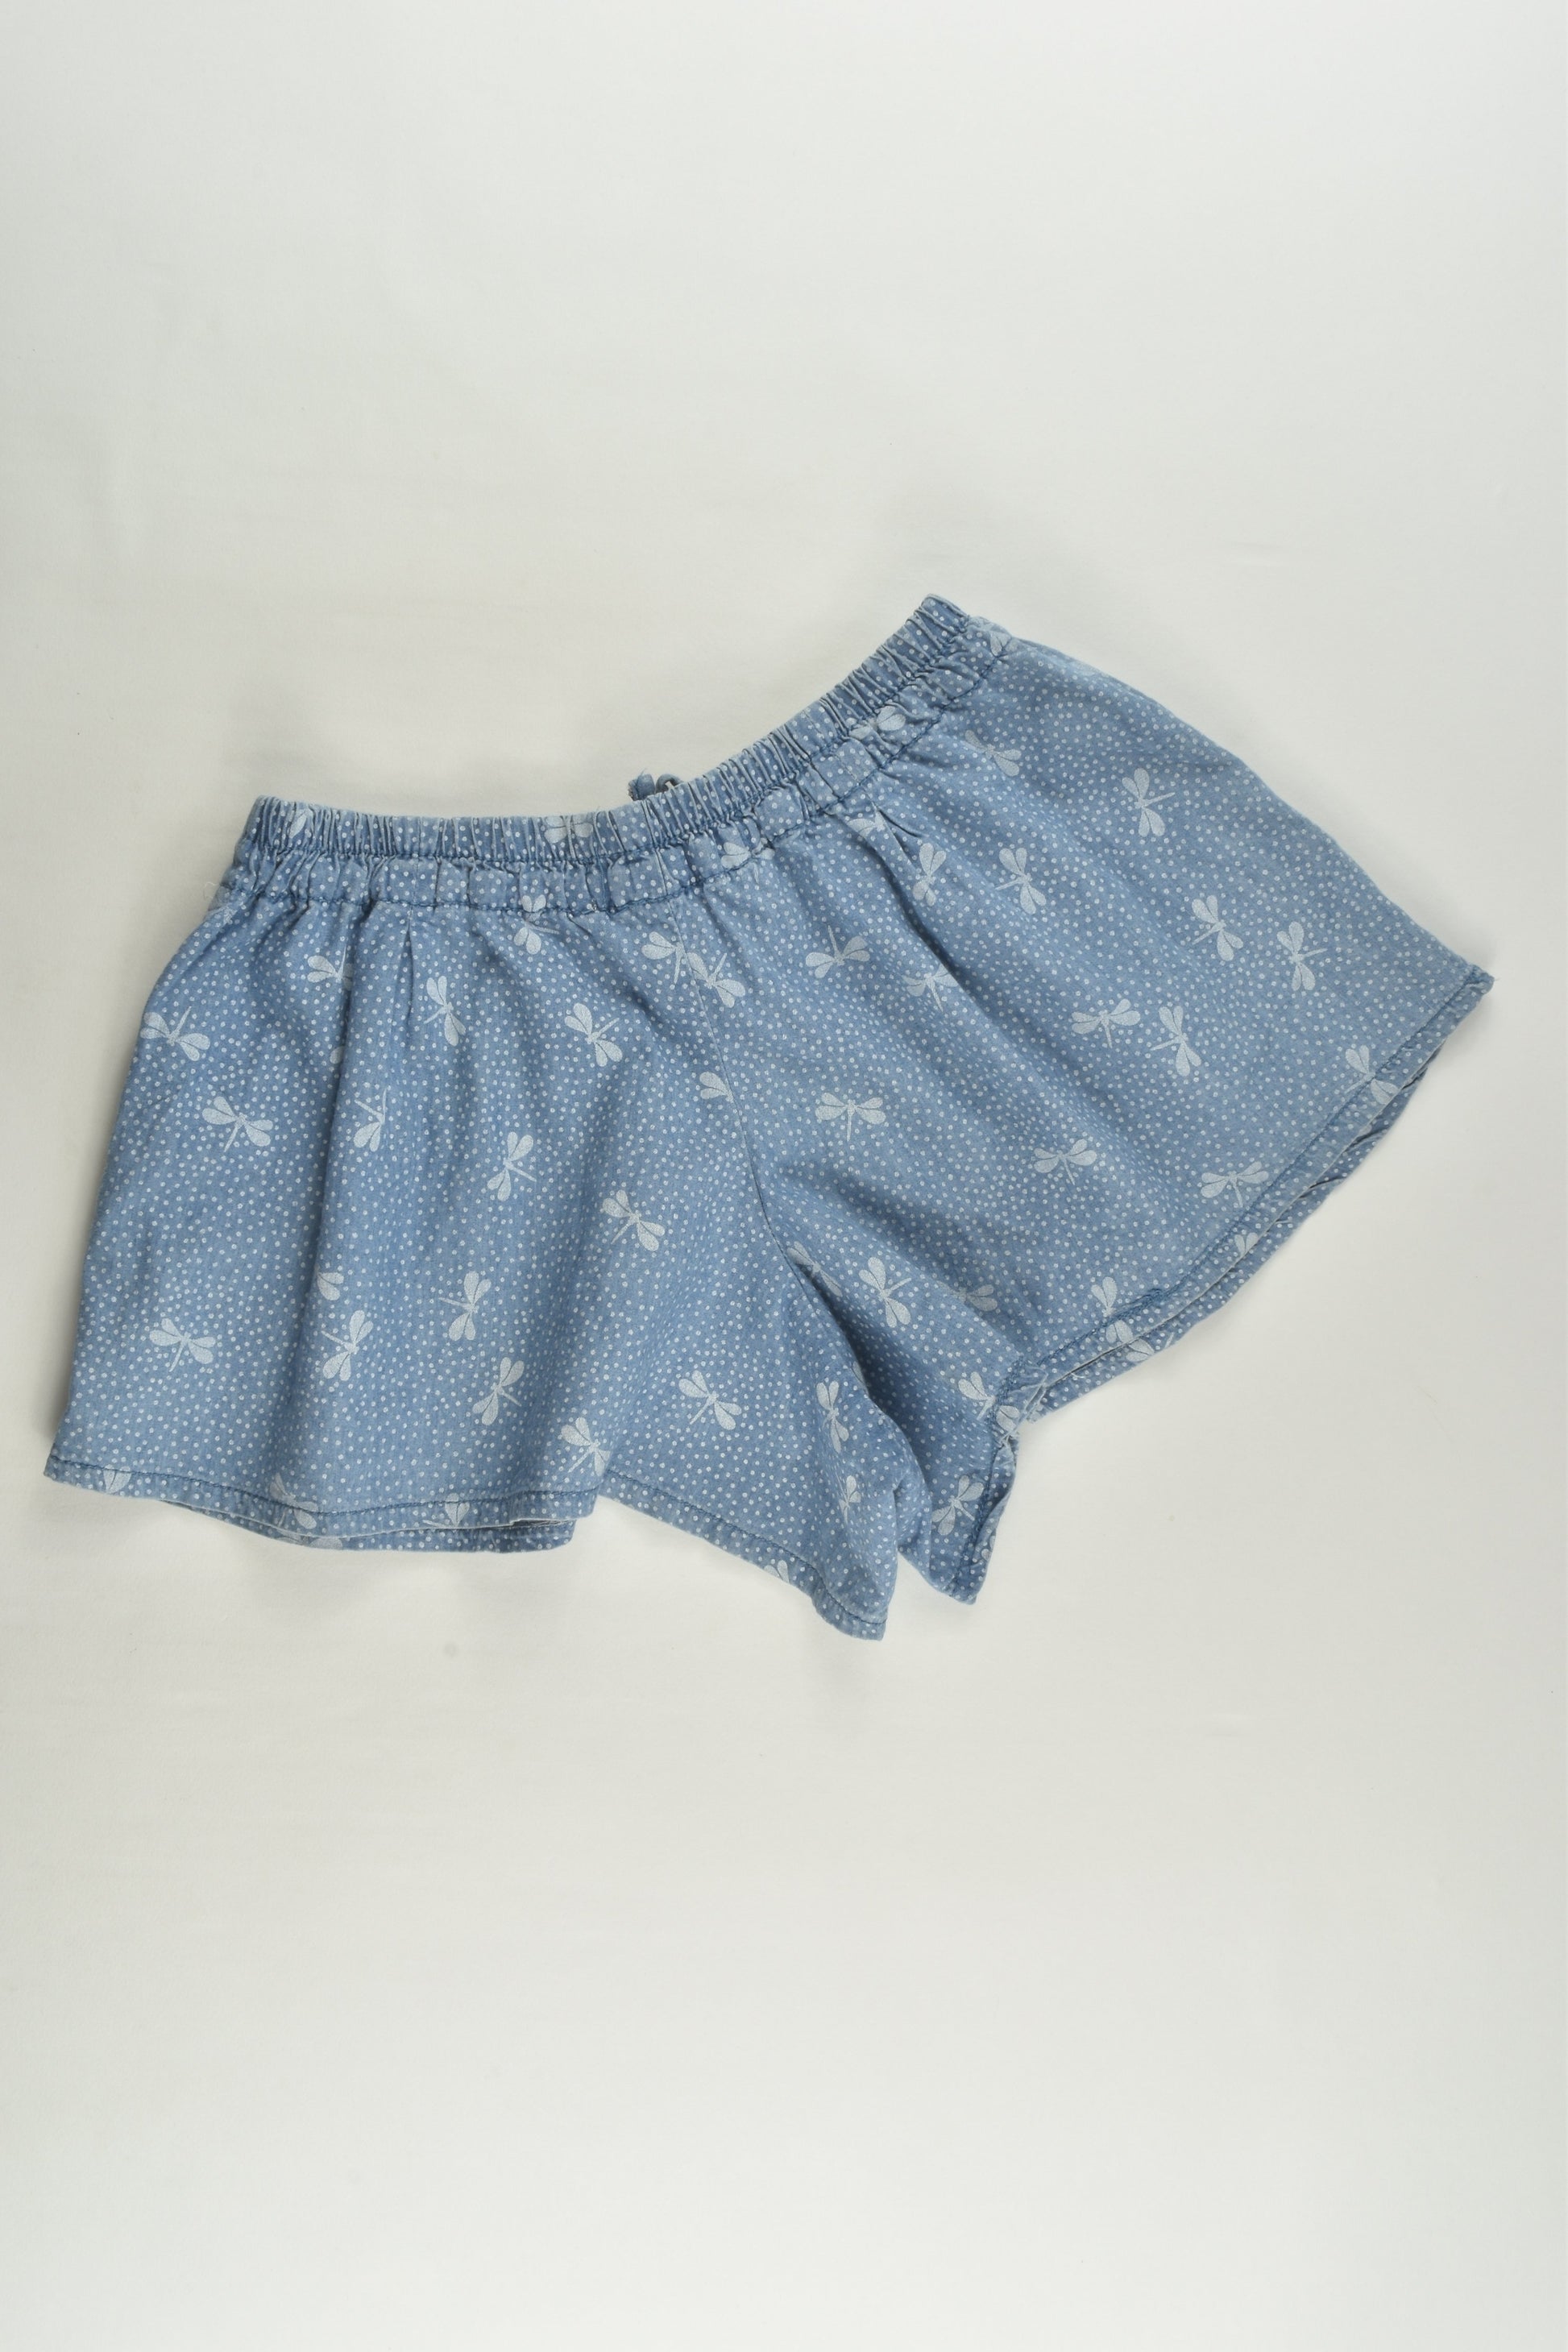 Cotton On Kids Size 7 Dragonfly Lightweight Denim Shorts